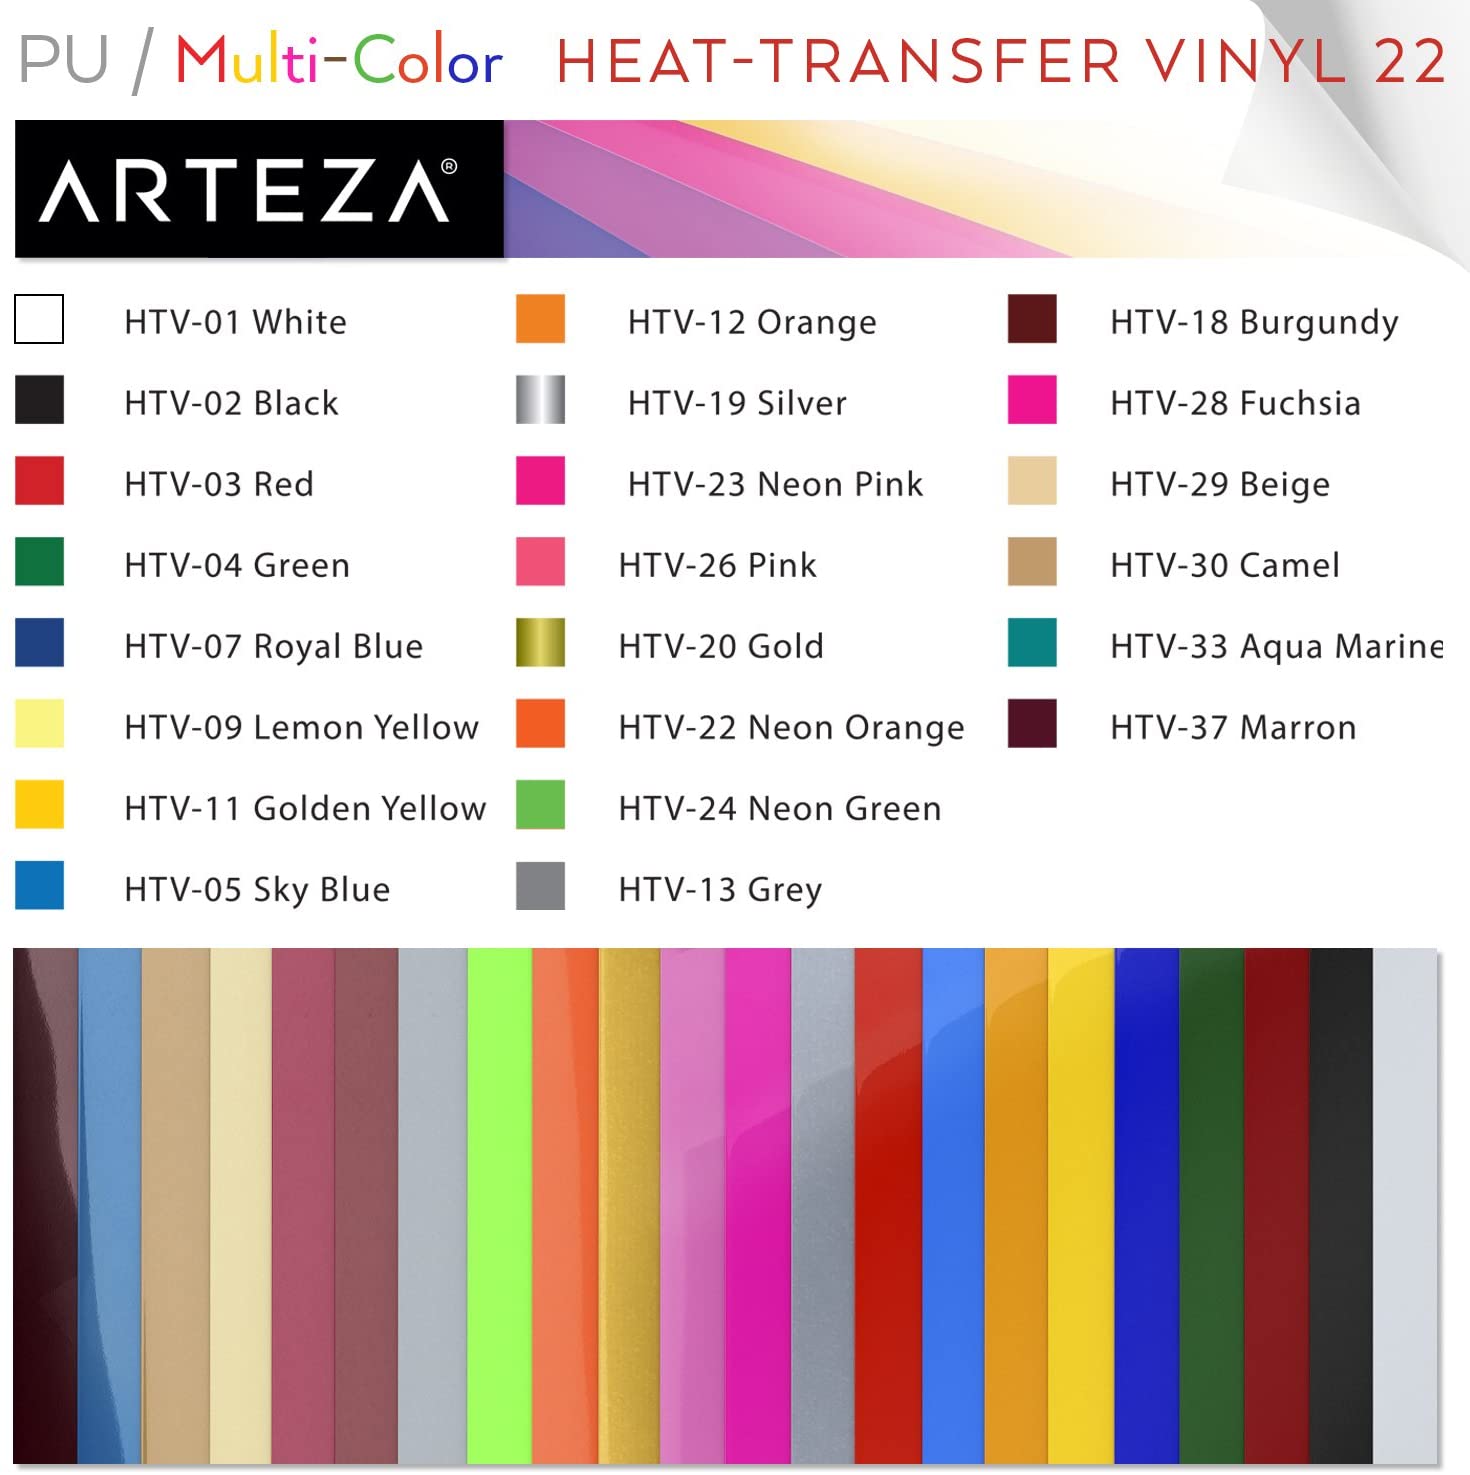 A brief introduction of PU heat transfer vinyl